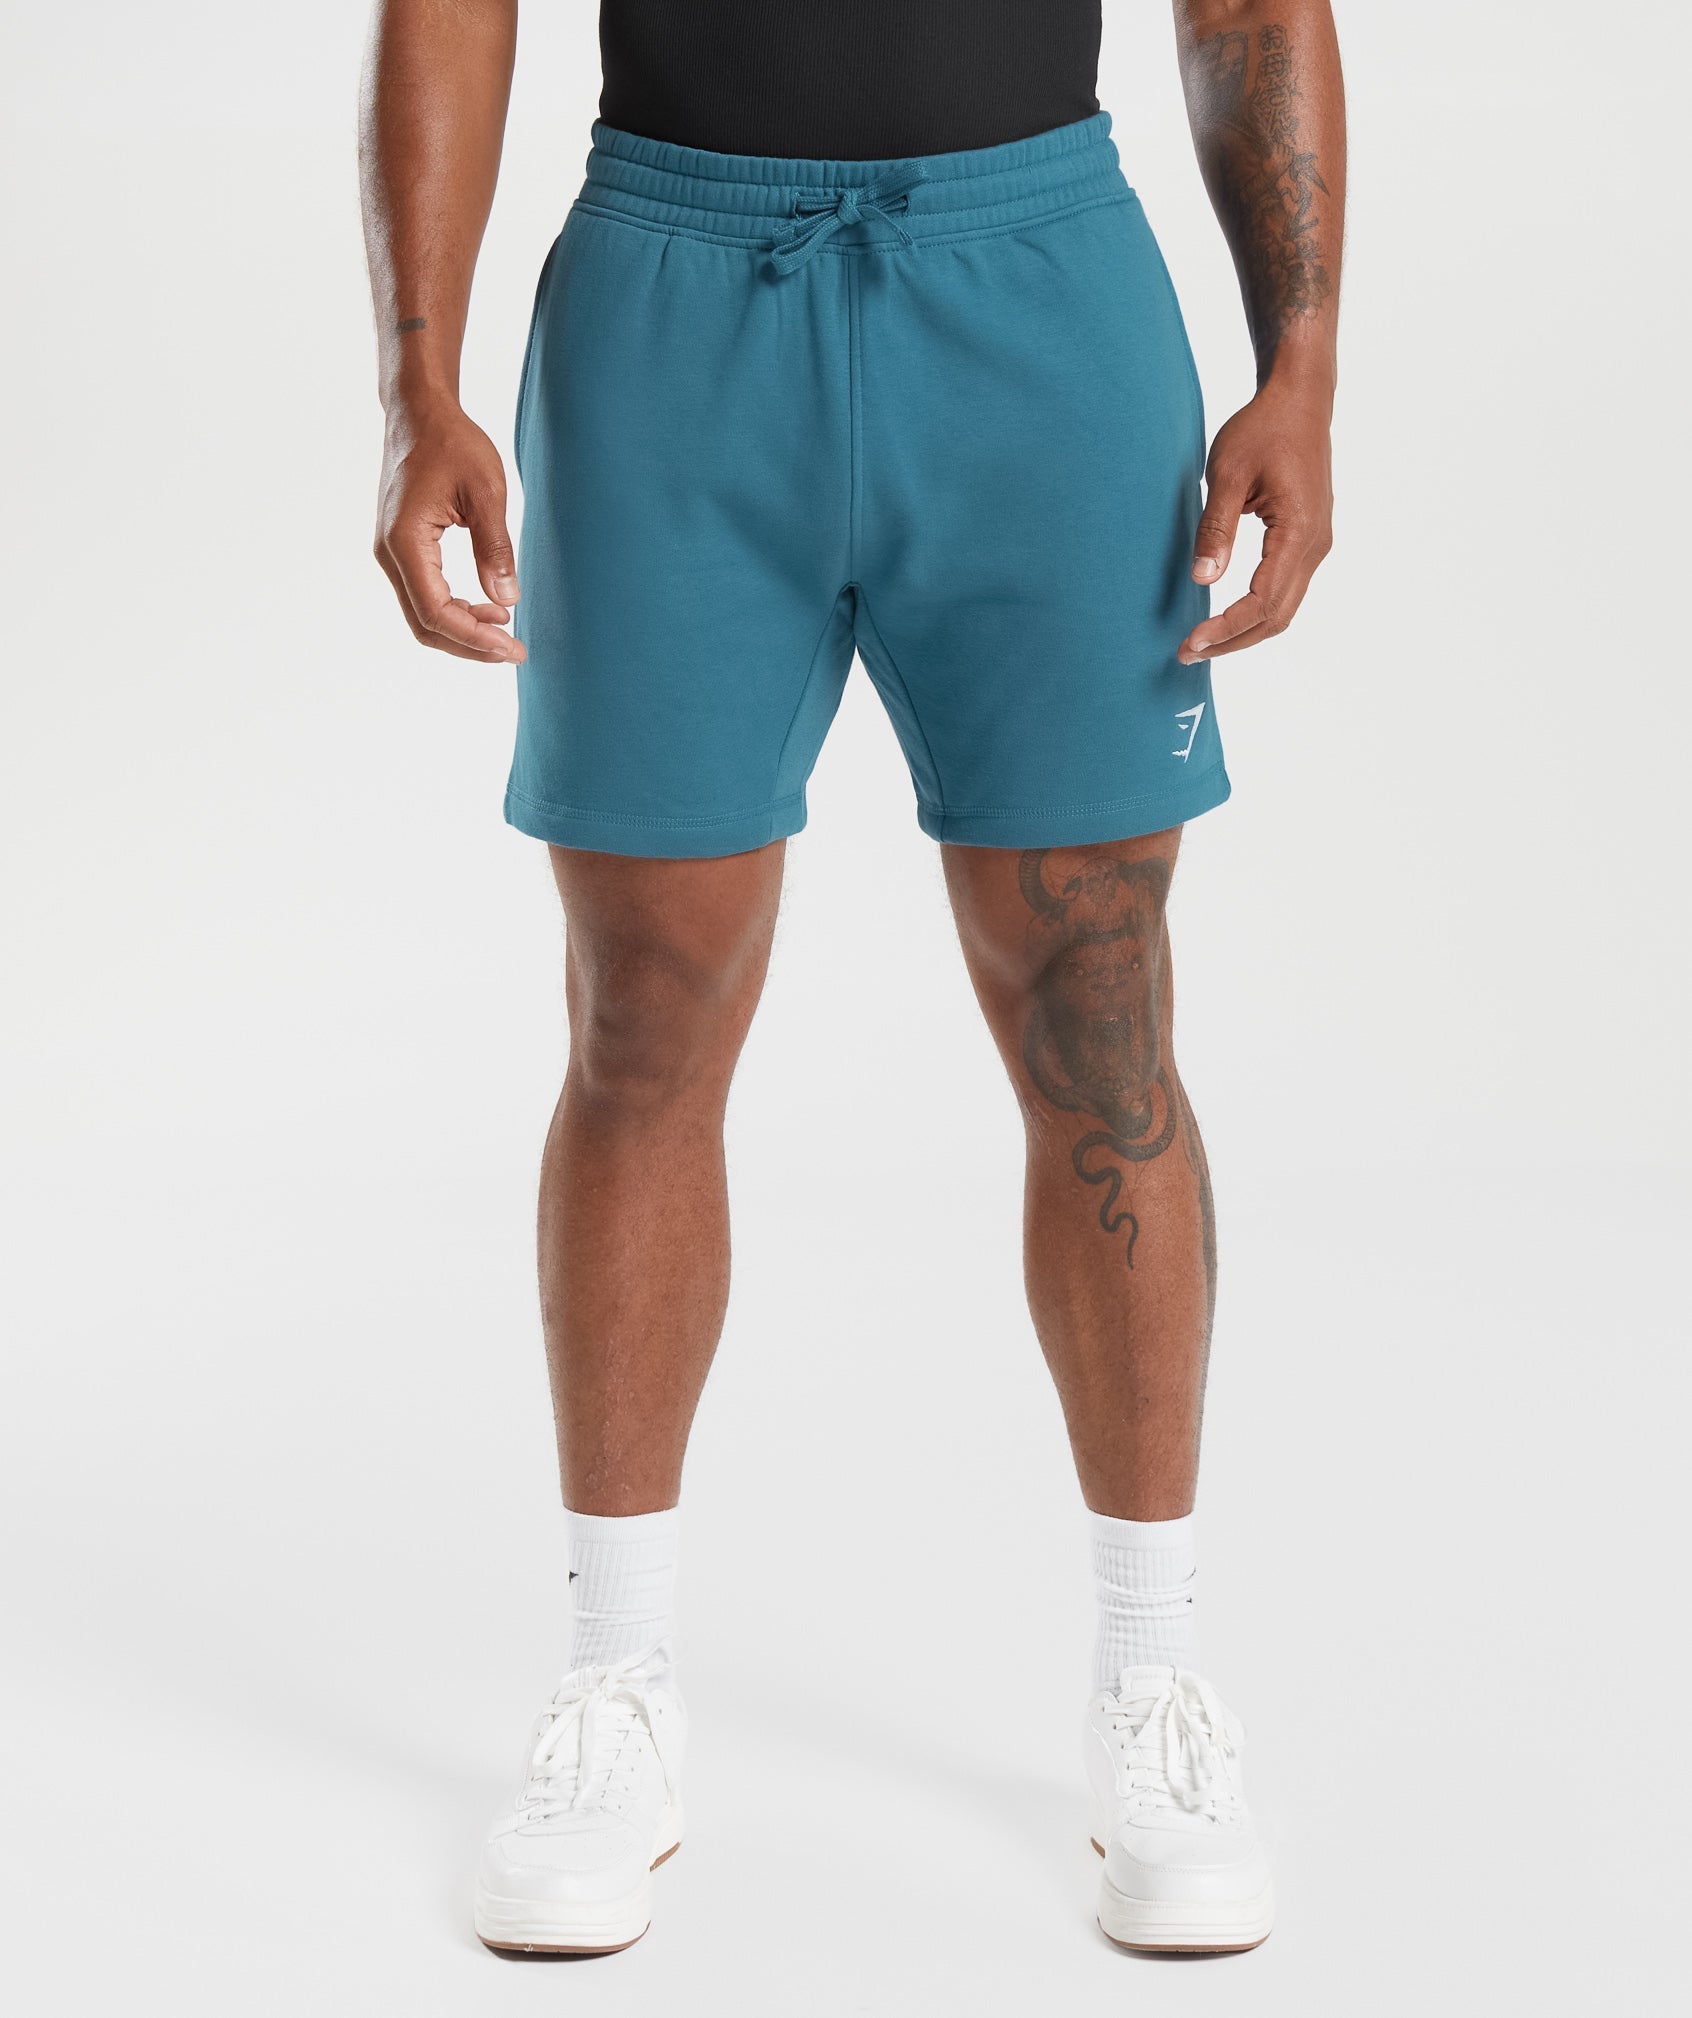 Gymshark Crest 7 Shorts - Terrace Blue